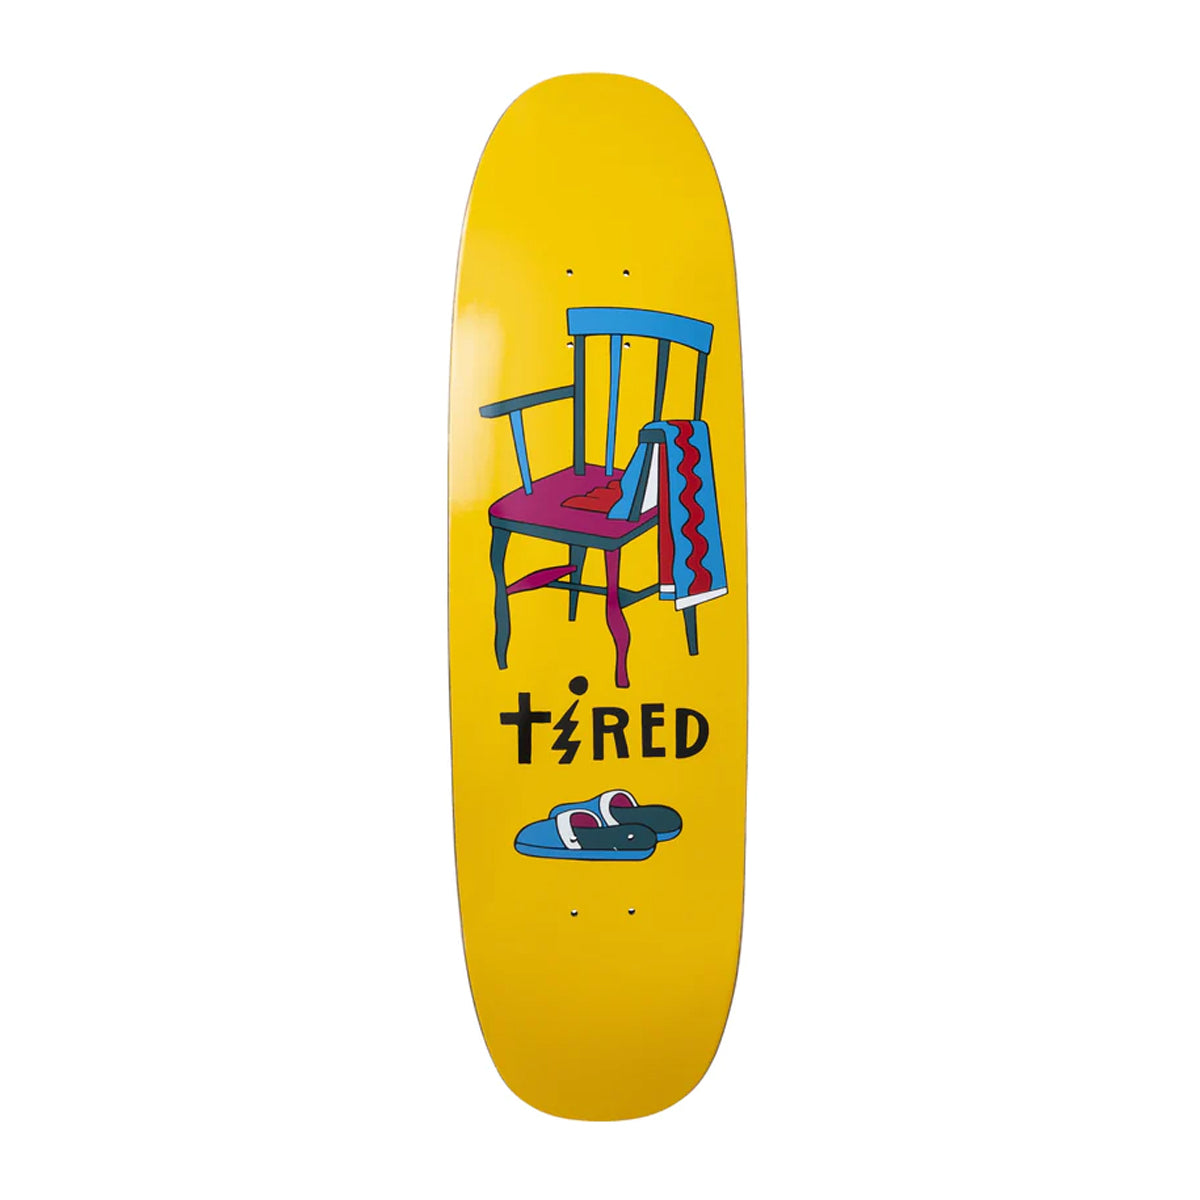 Tired Donny Jolt Skateboard Deck 8.75" - Apple Valley Emporium